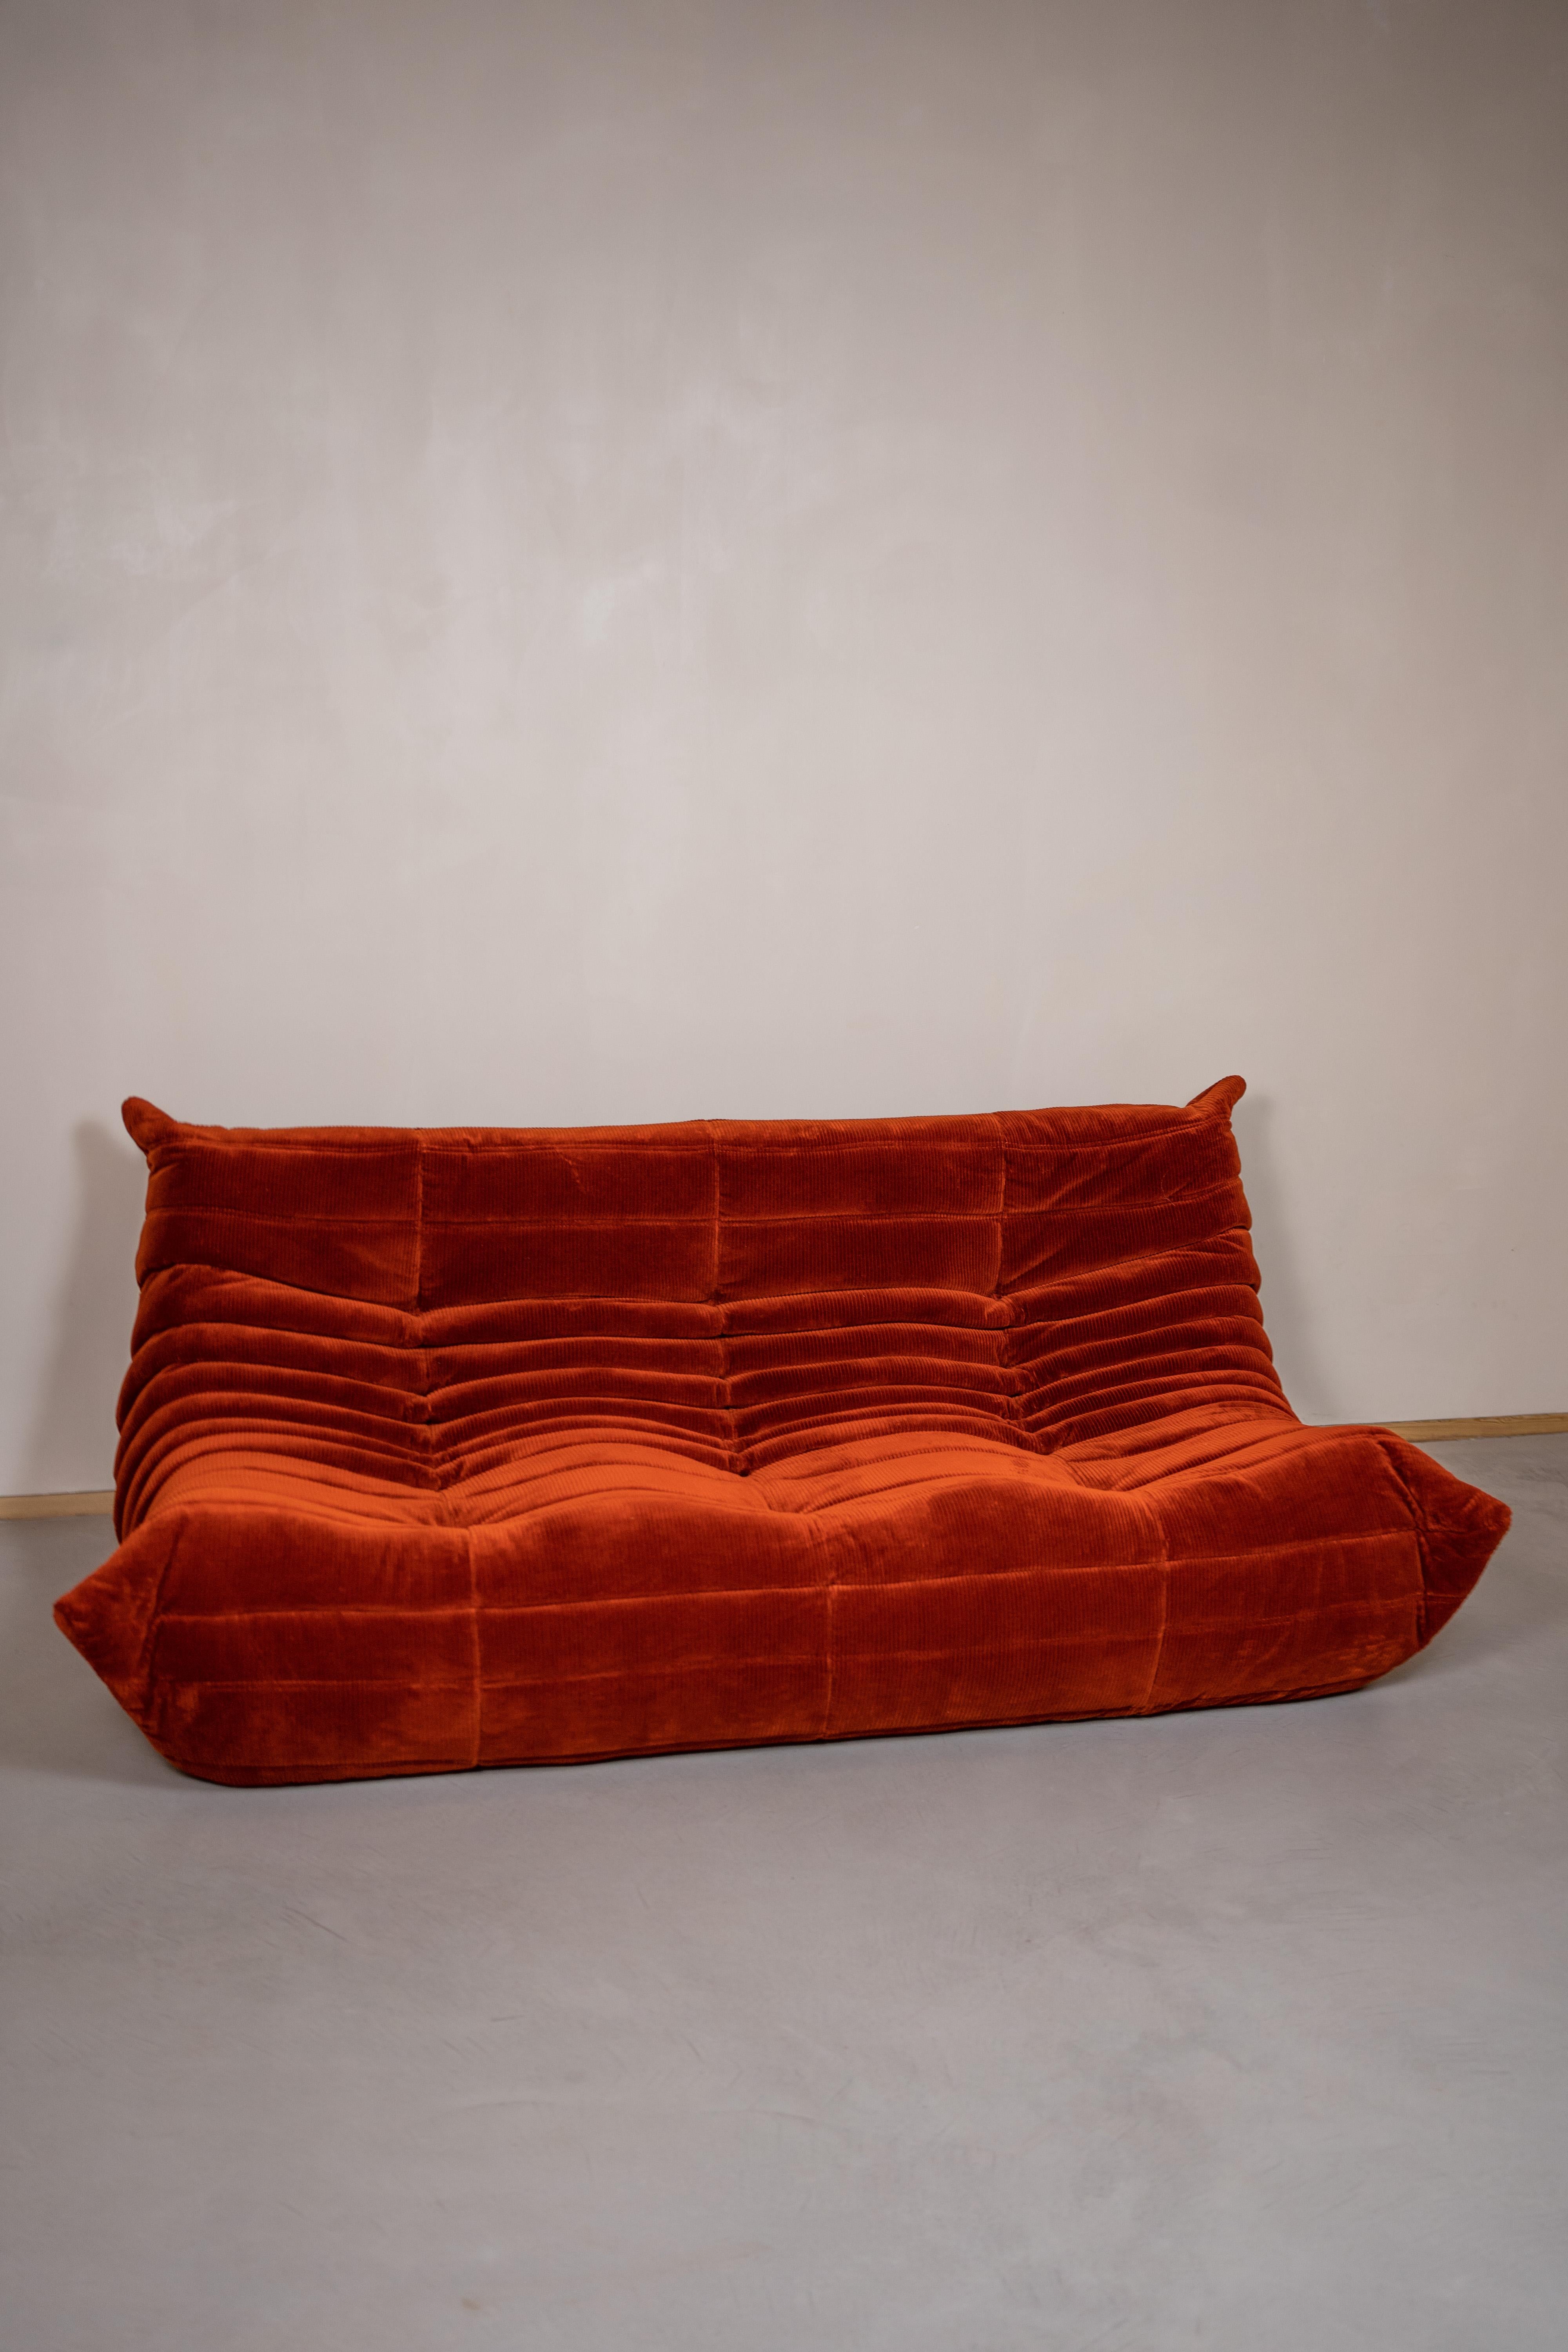 michel ducaroy sofa